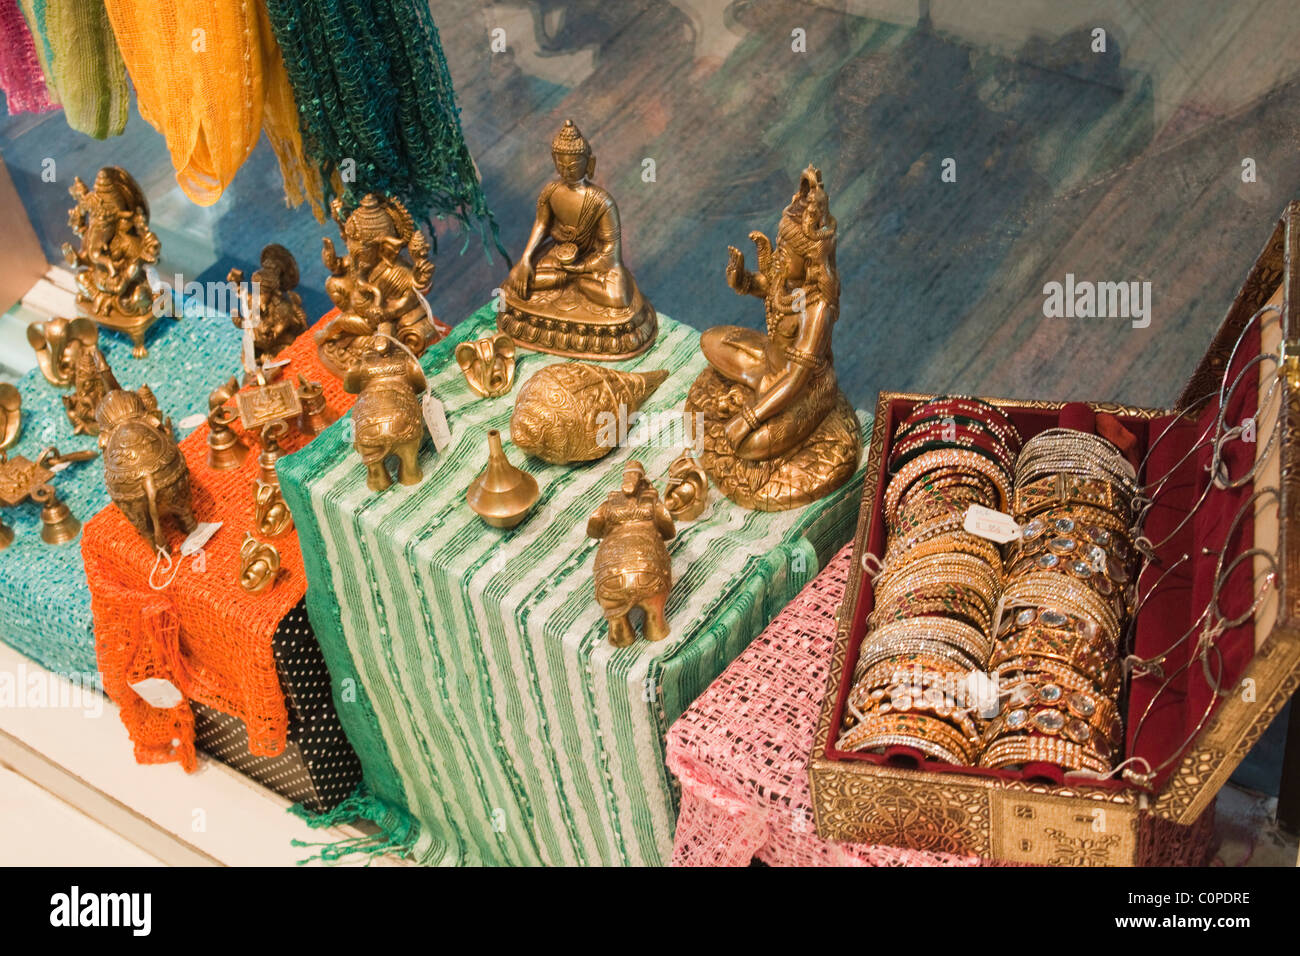 Idols with a jewelry box at a market stall, New Delhi, India Stock Photo